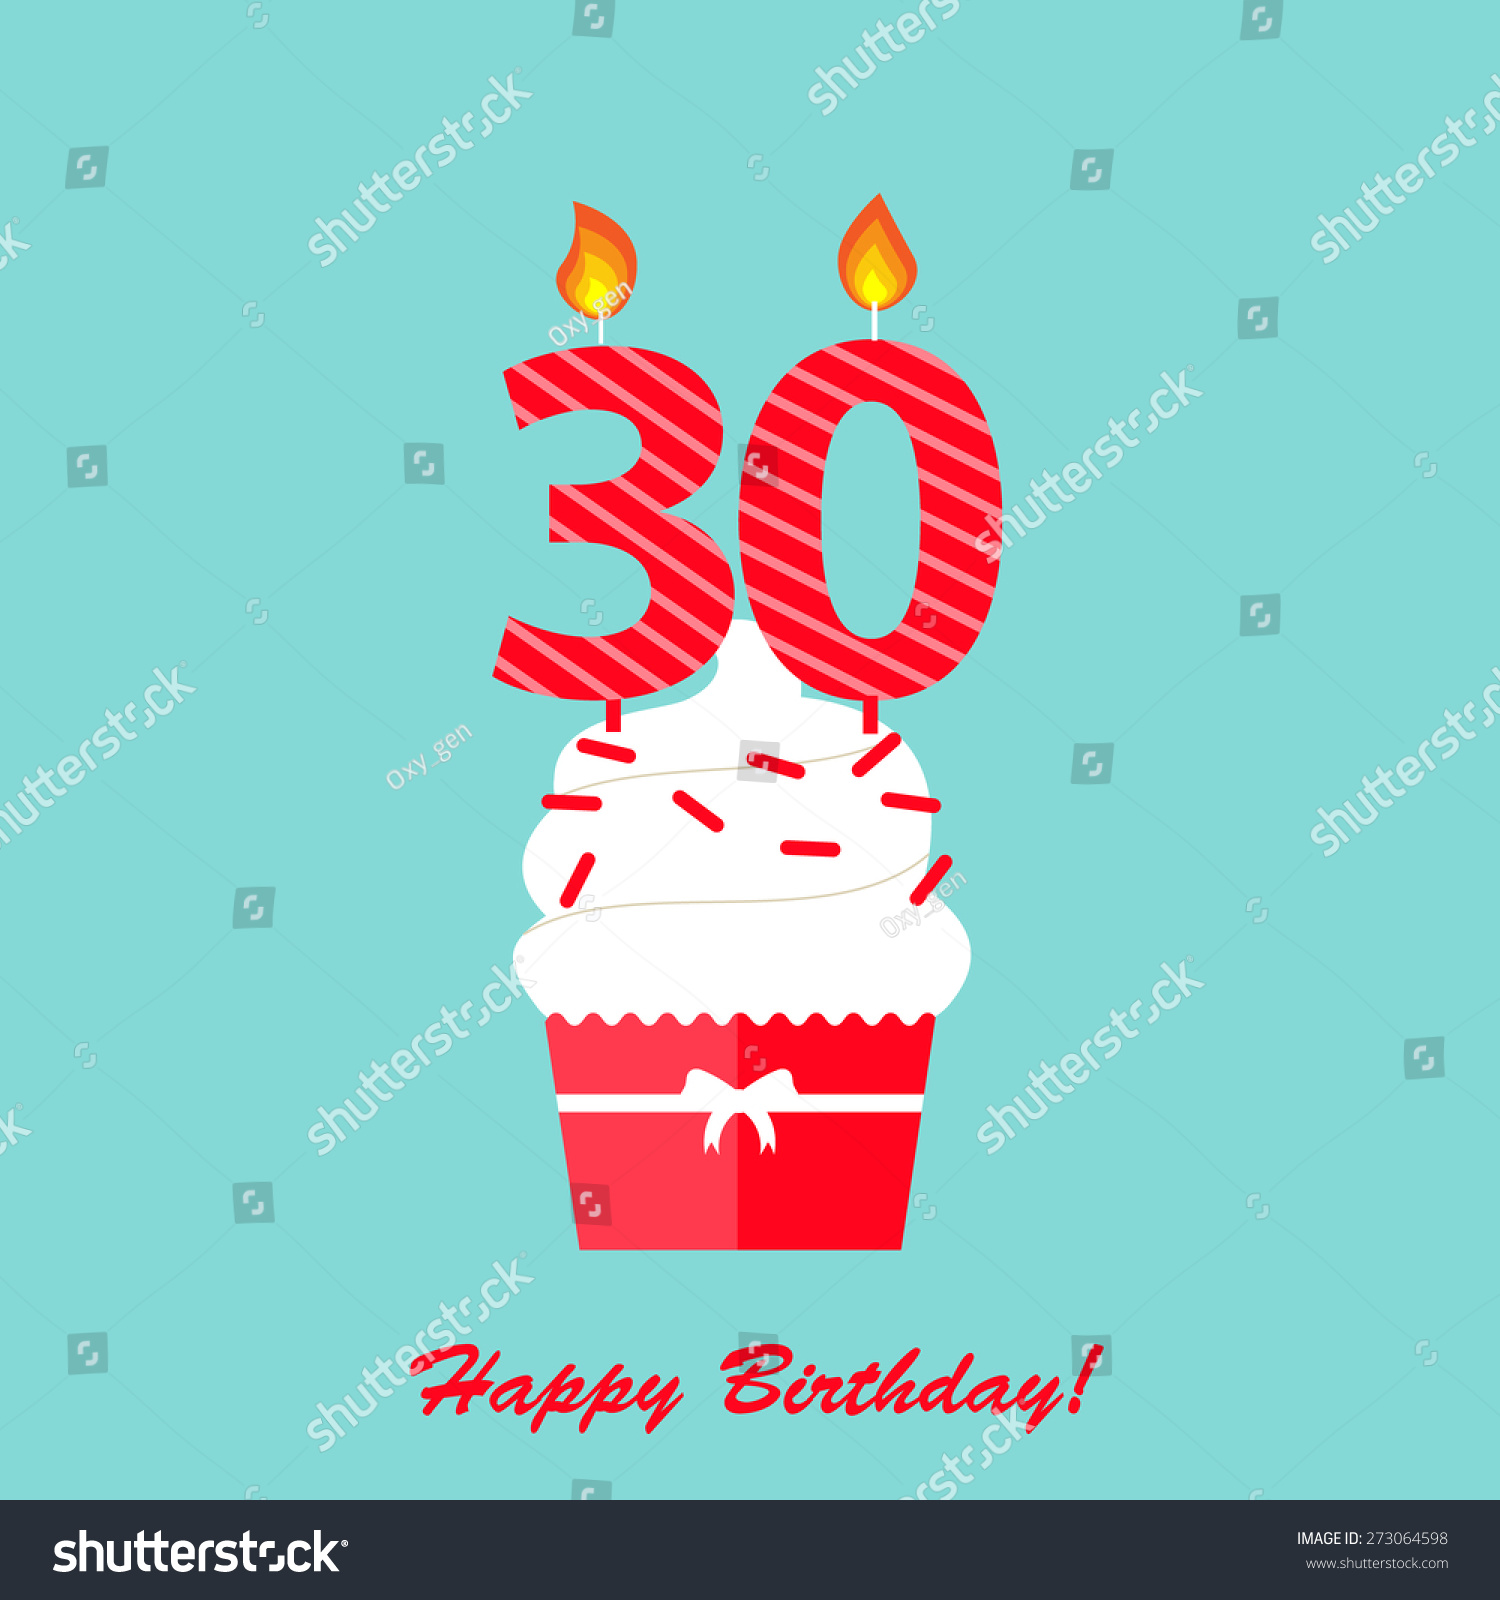 Happy 30th Birthday Anniversary greeting card - Royalty Free Stock ...